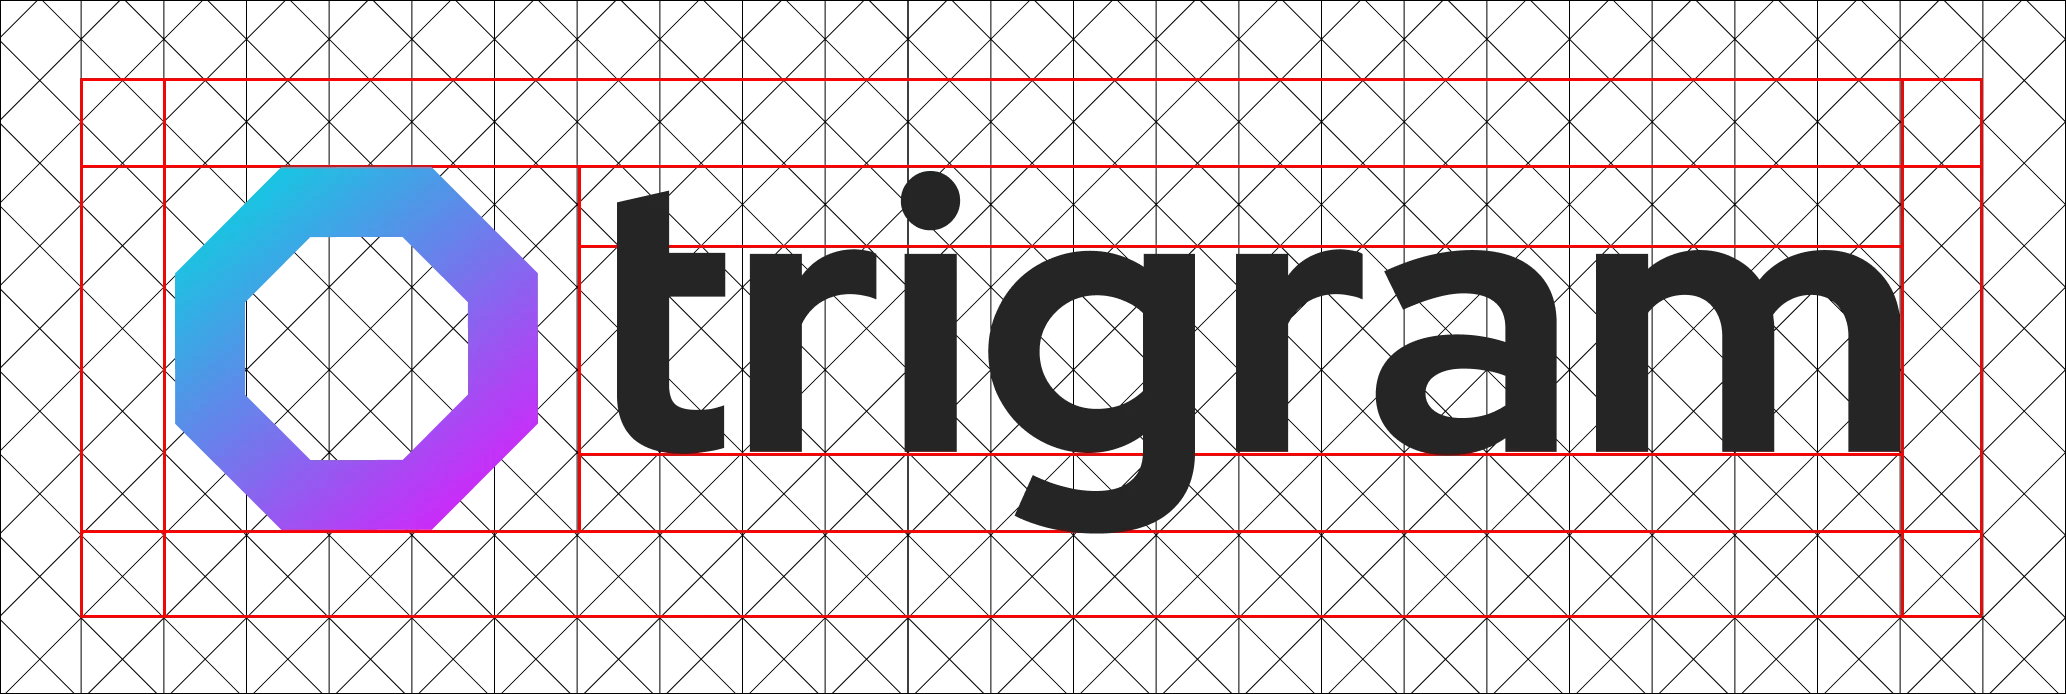 trigram logo in a grid